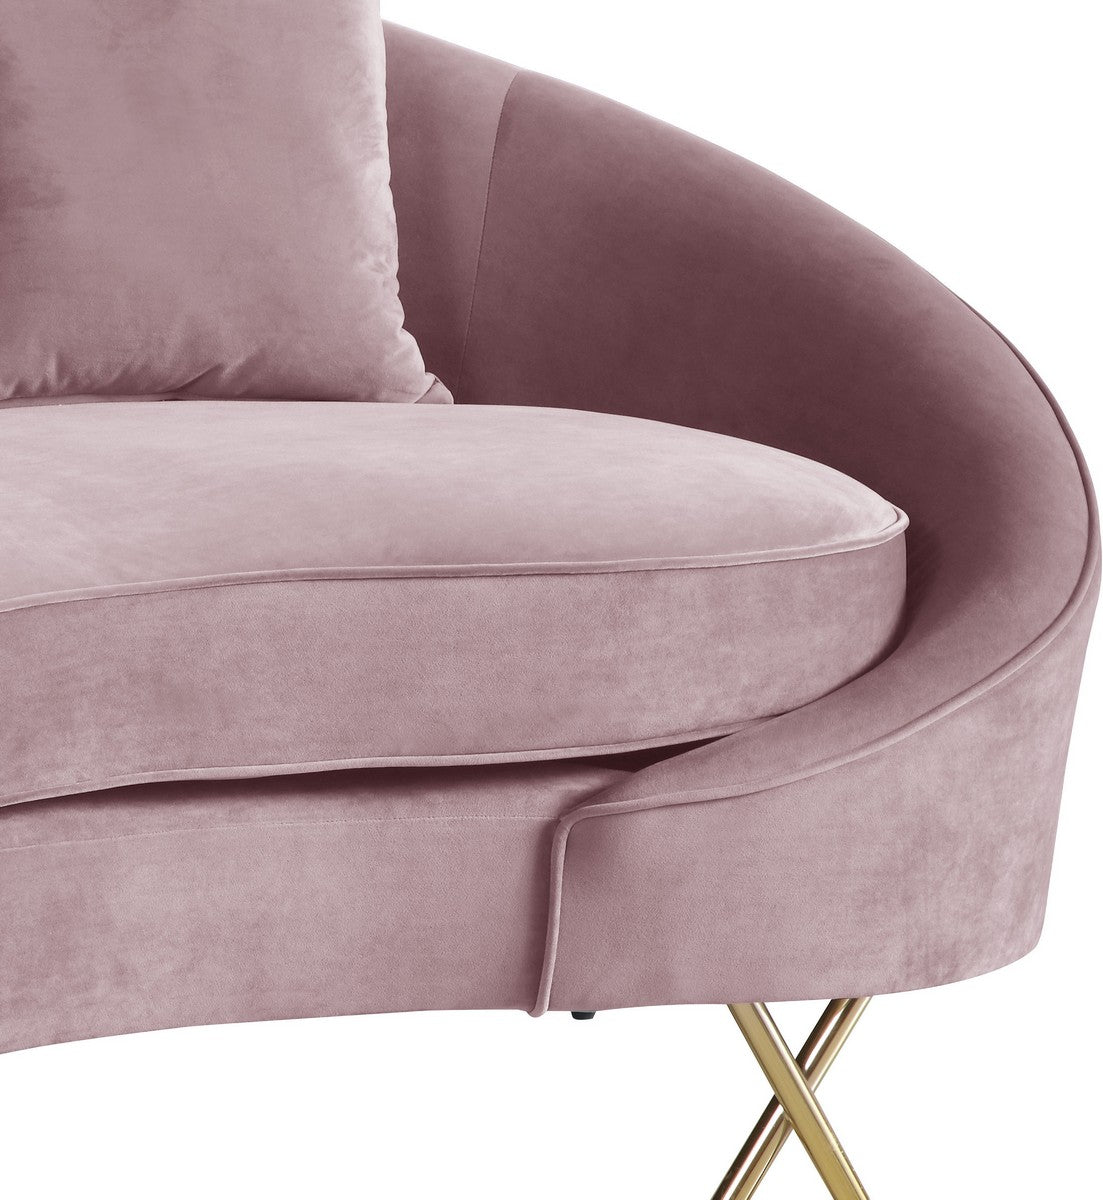 Meridian Furniture Serpentine Pink Velvet Loveseat